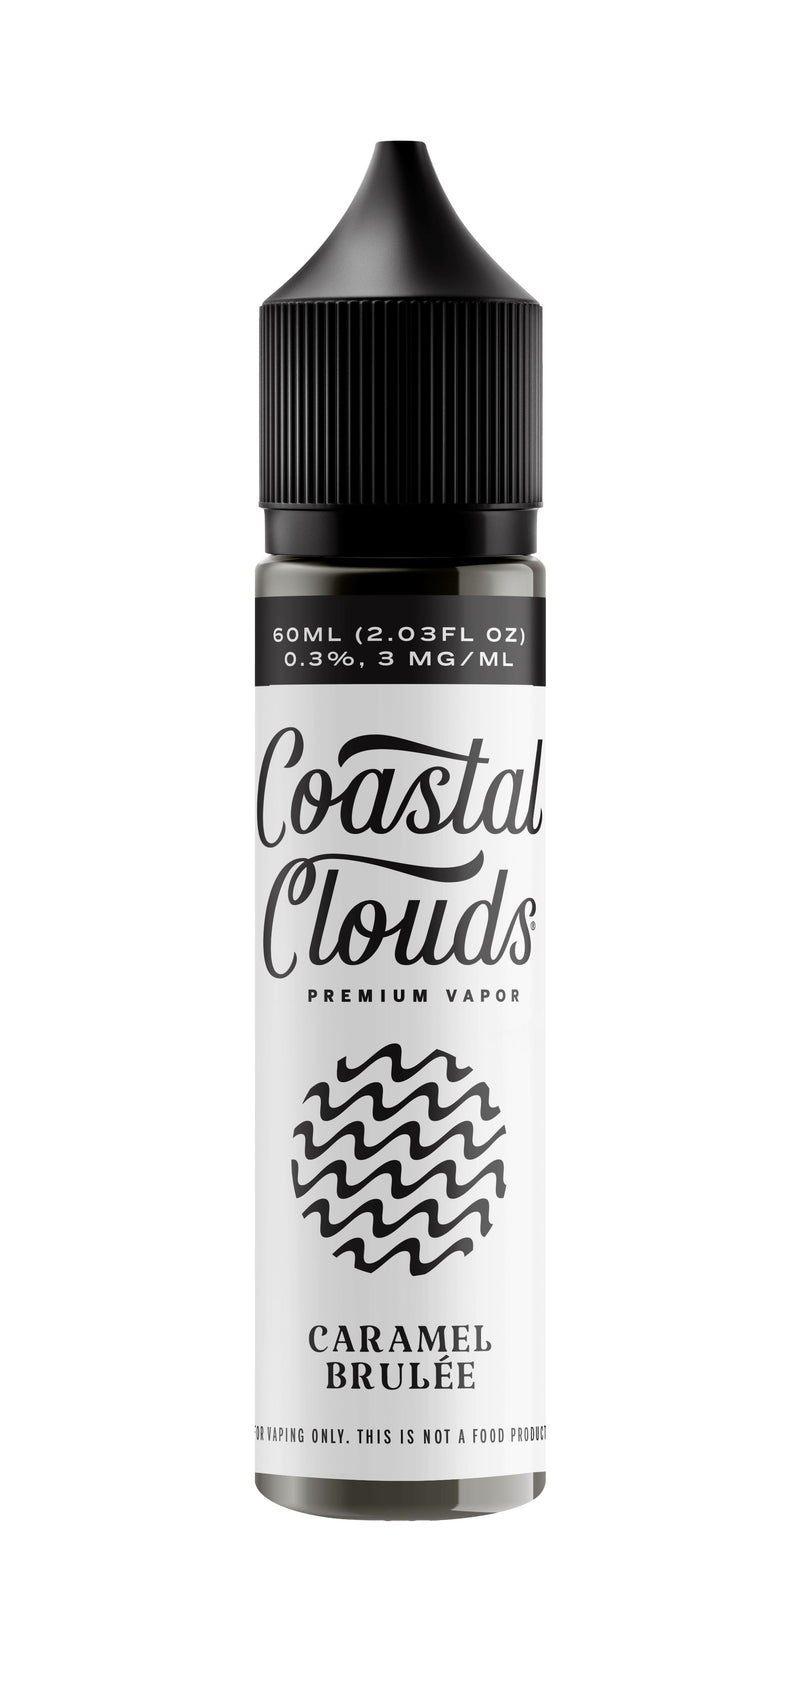 Caramel Brulee by Coastal Clouds TFN 60ml Bottle